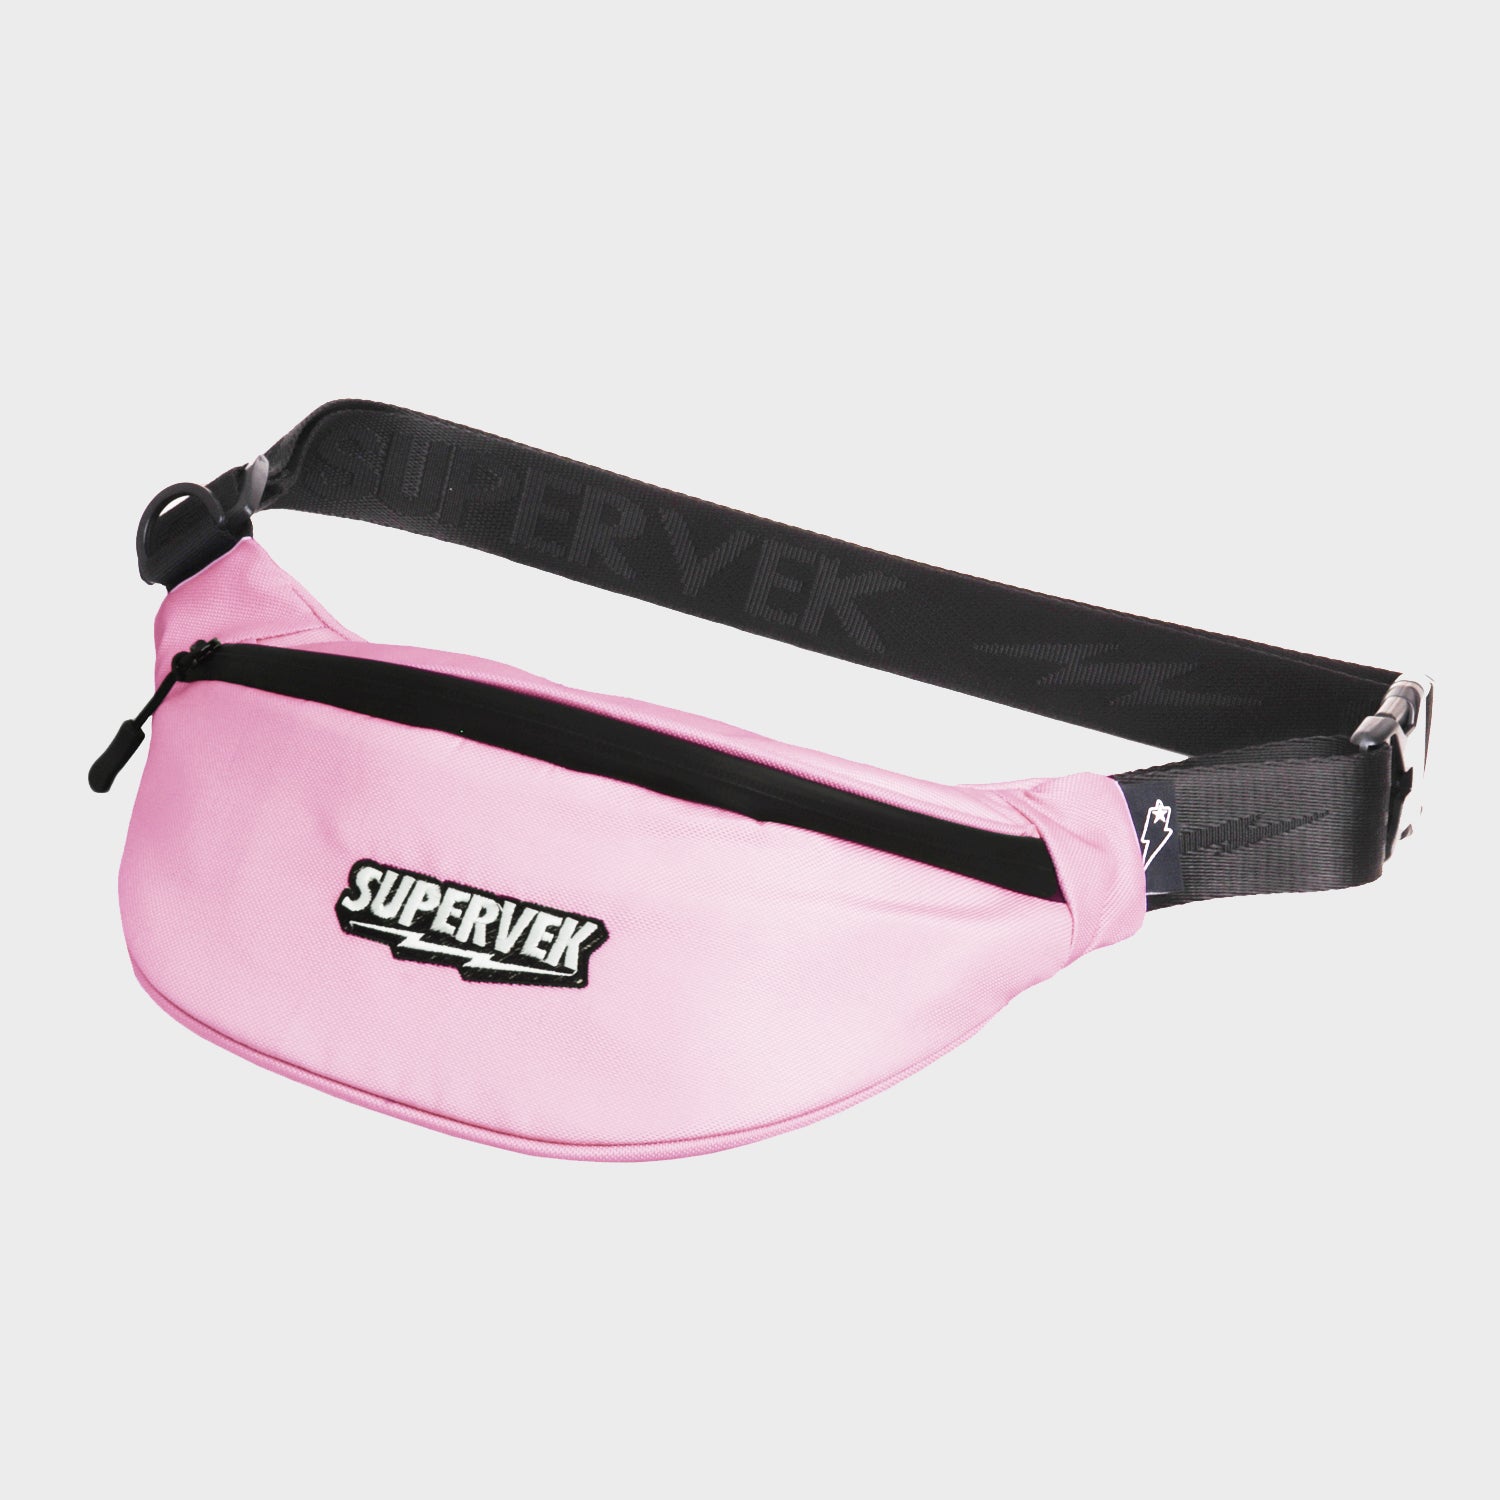 Supervek Crossbody Slinger - Candycrush Pink - Urban Functional Fanny Hip Bag for Everyday Essentials - Product Shot